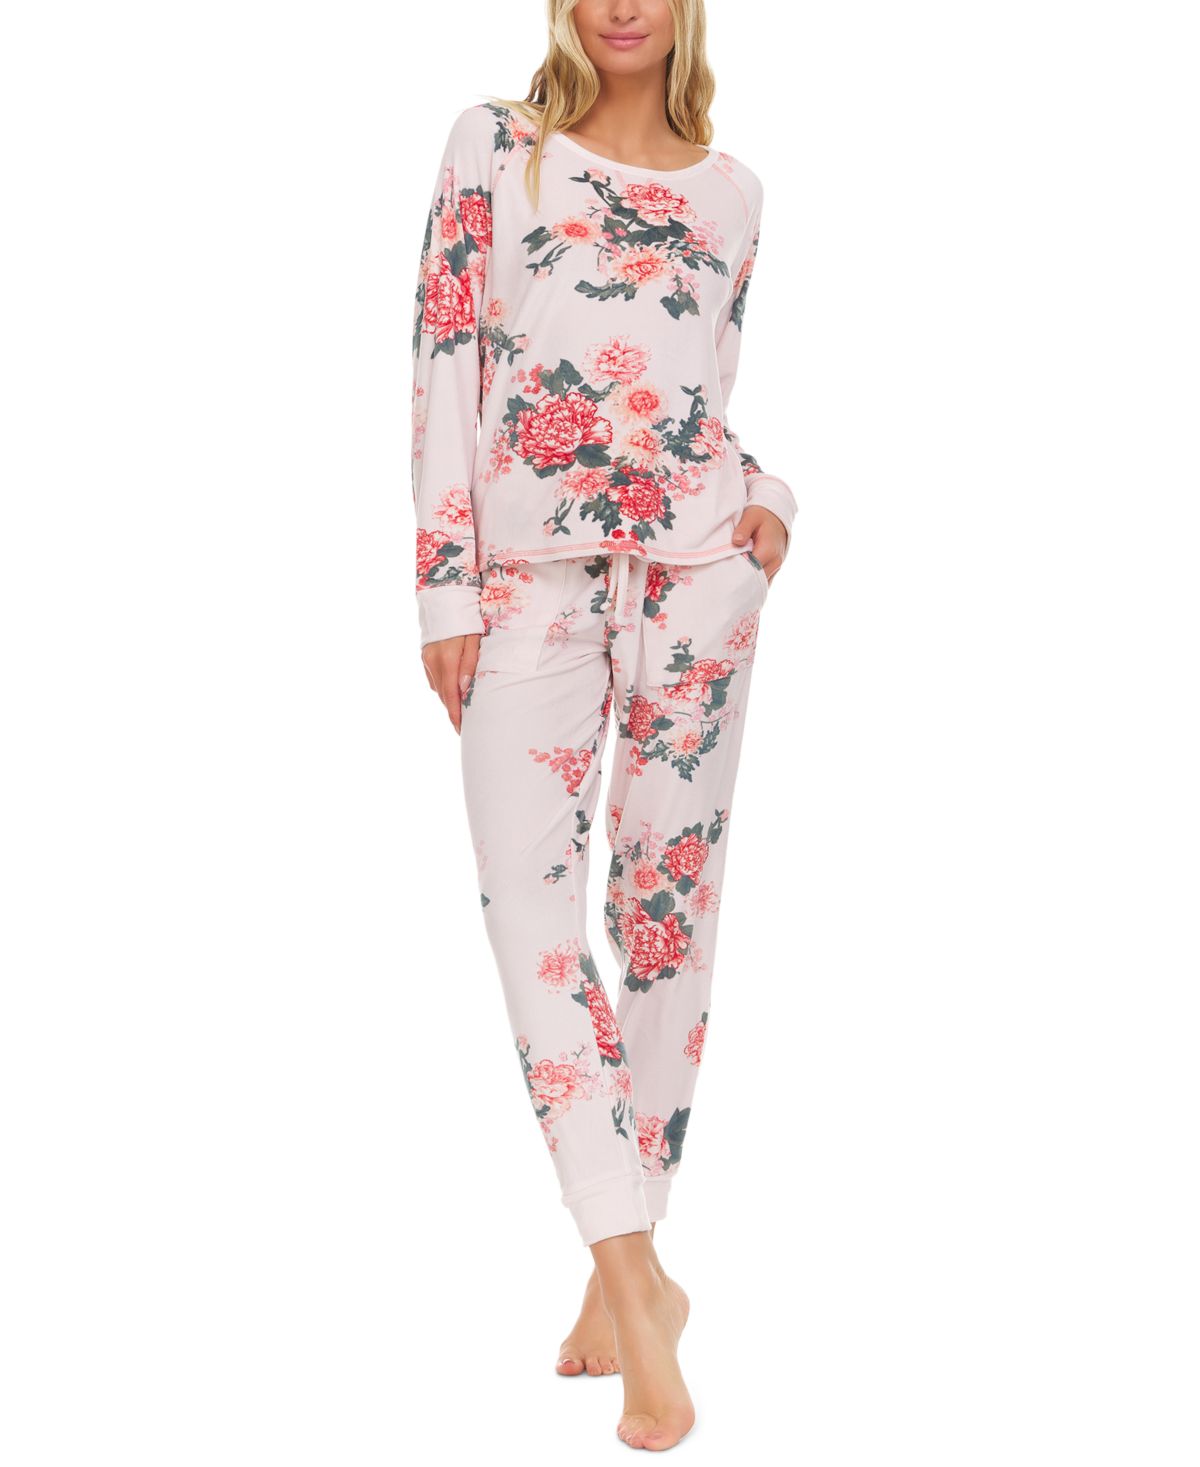 Flora by Flora Nikrooz Womens Printed Velour Pajama Set | eBay